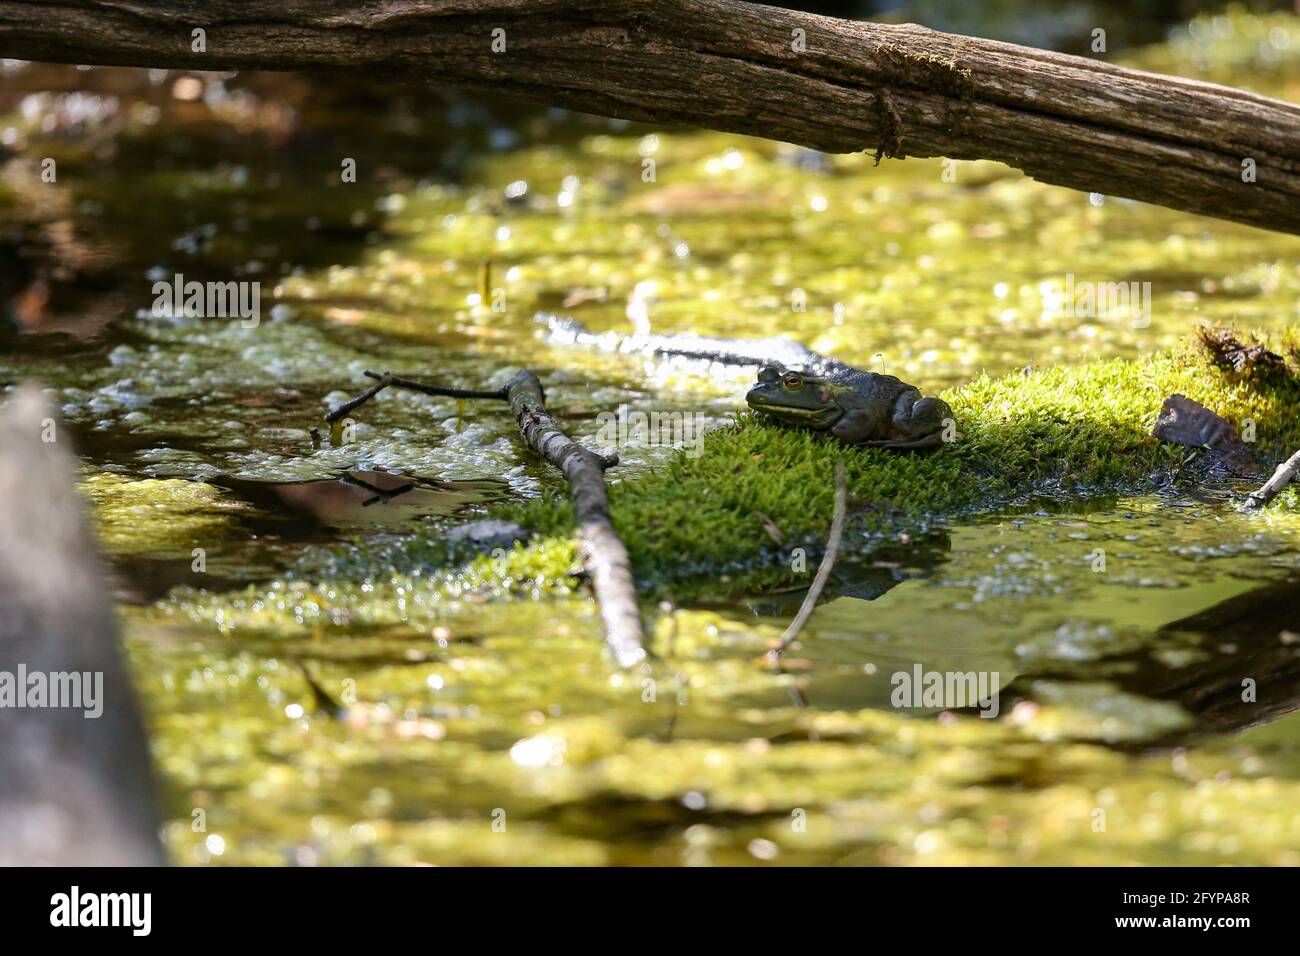 Frog sitting on moss in Pond. Luke Durda/Alamy Stock Photo